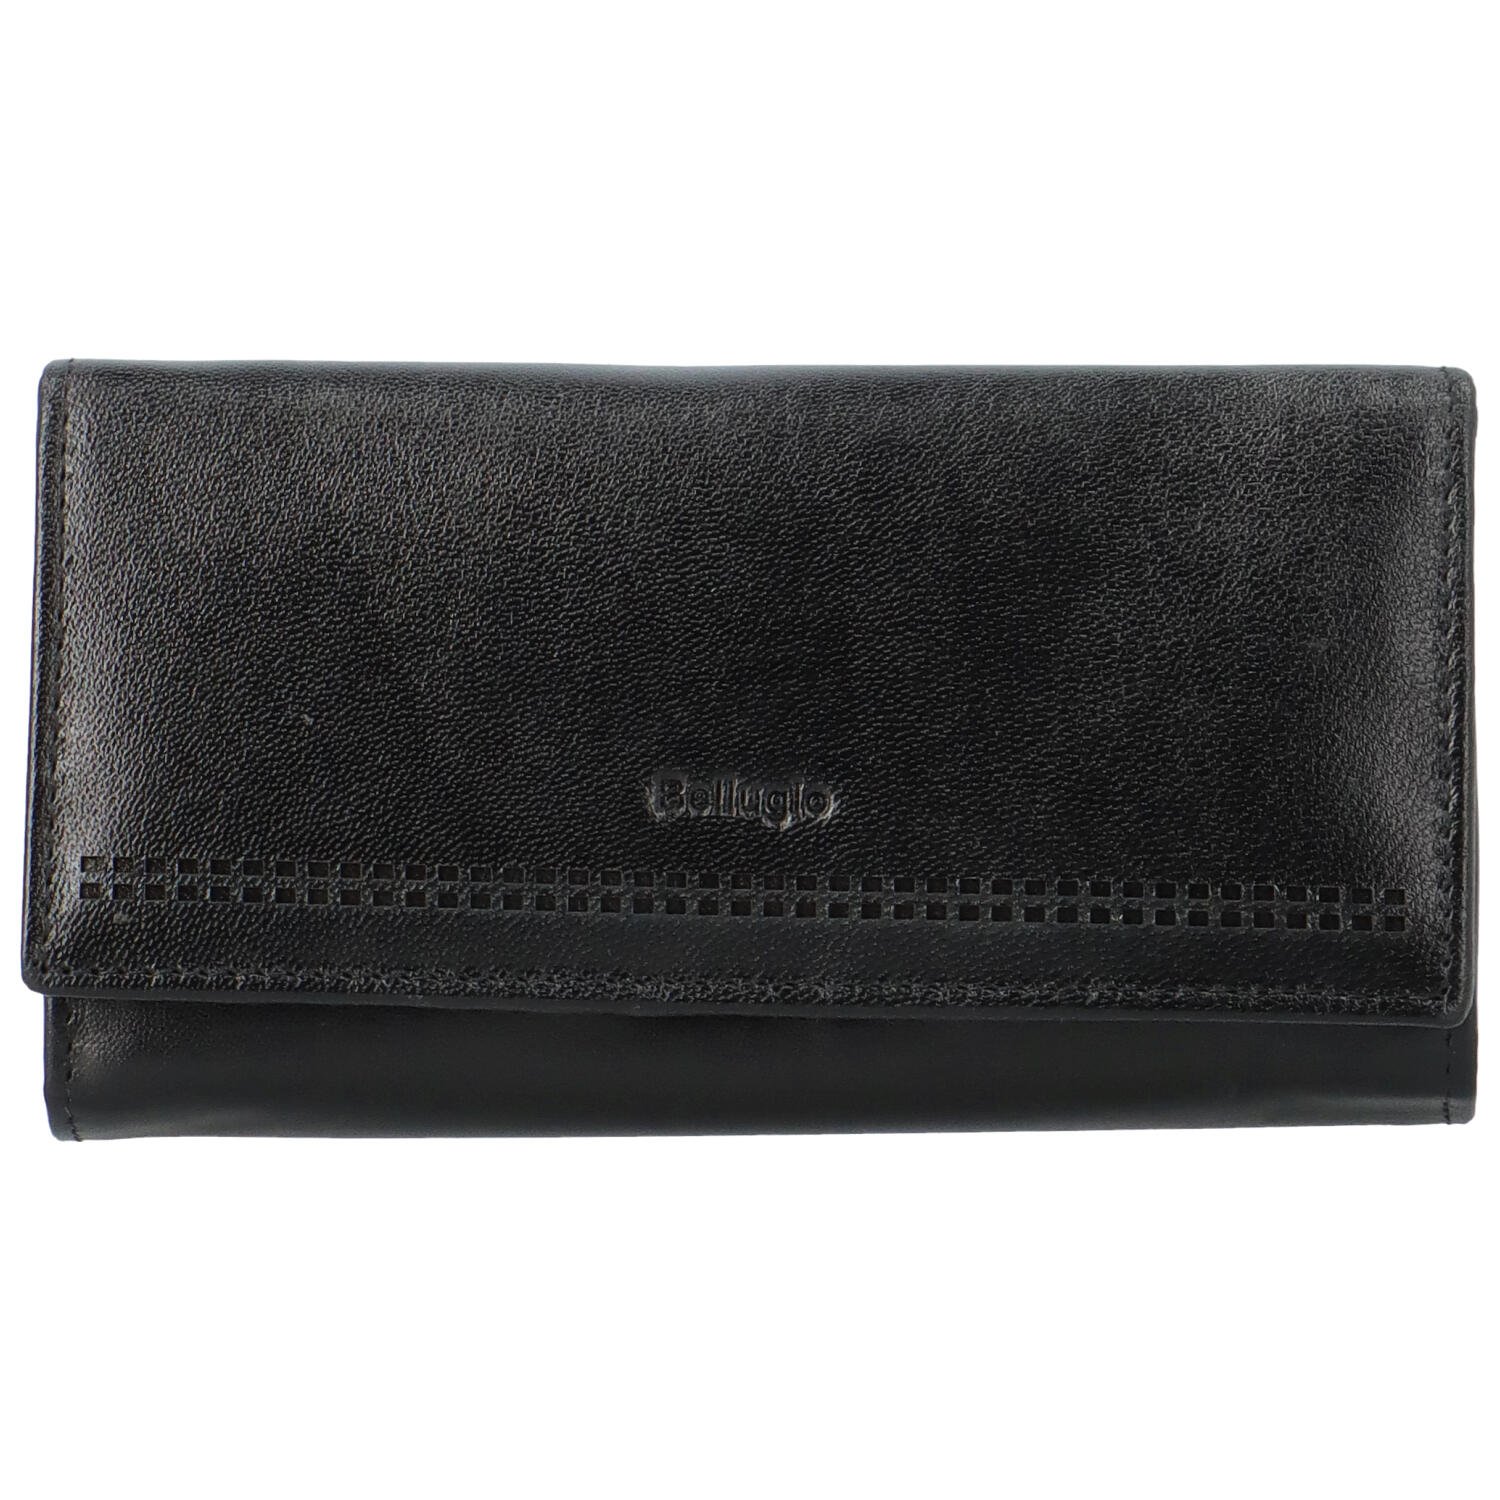 Dámská kožená peněženka černá - Bellugio Brenda